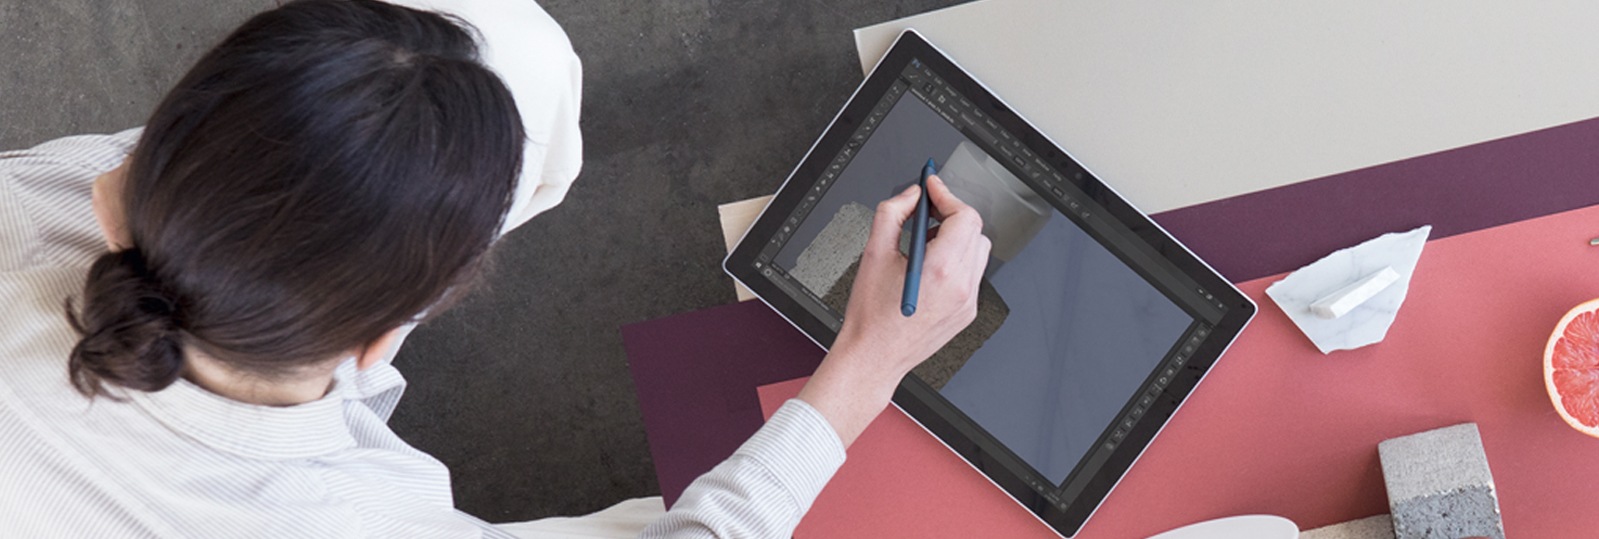 Surface ペン Microsoft Surface Pro Surface Go Surface Book などに対応しているペン スタイラス